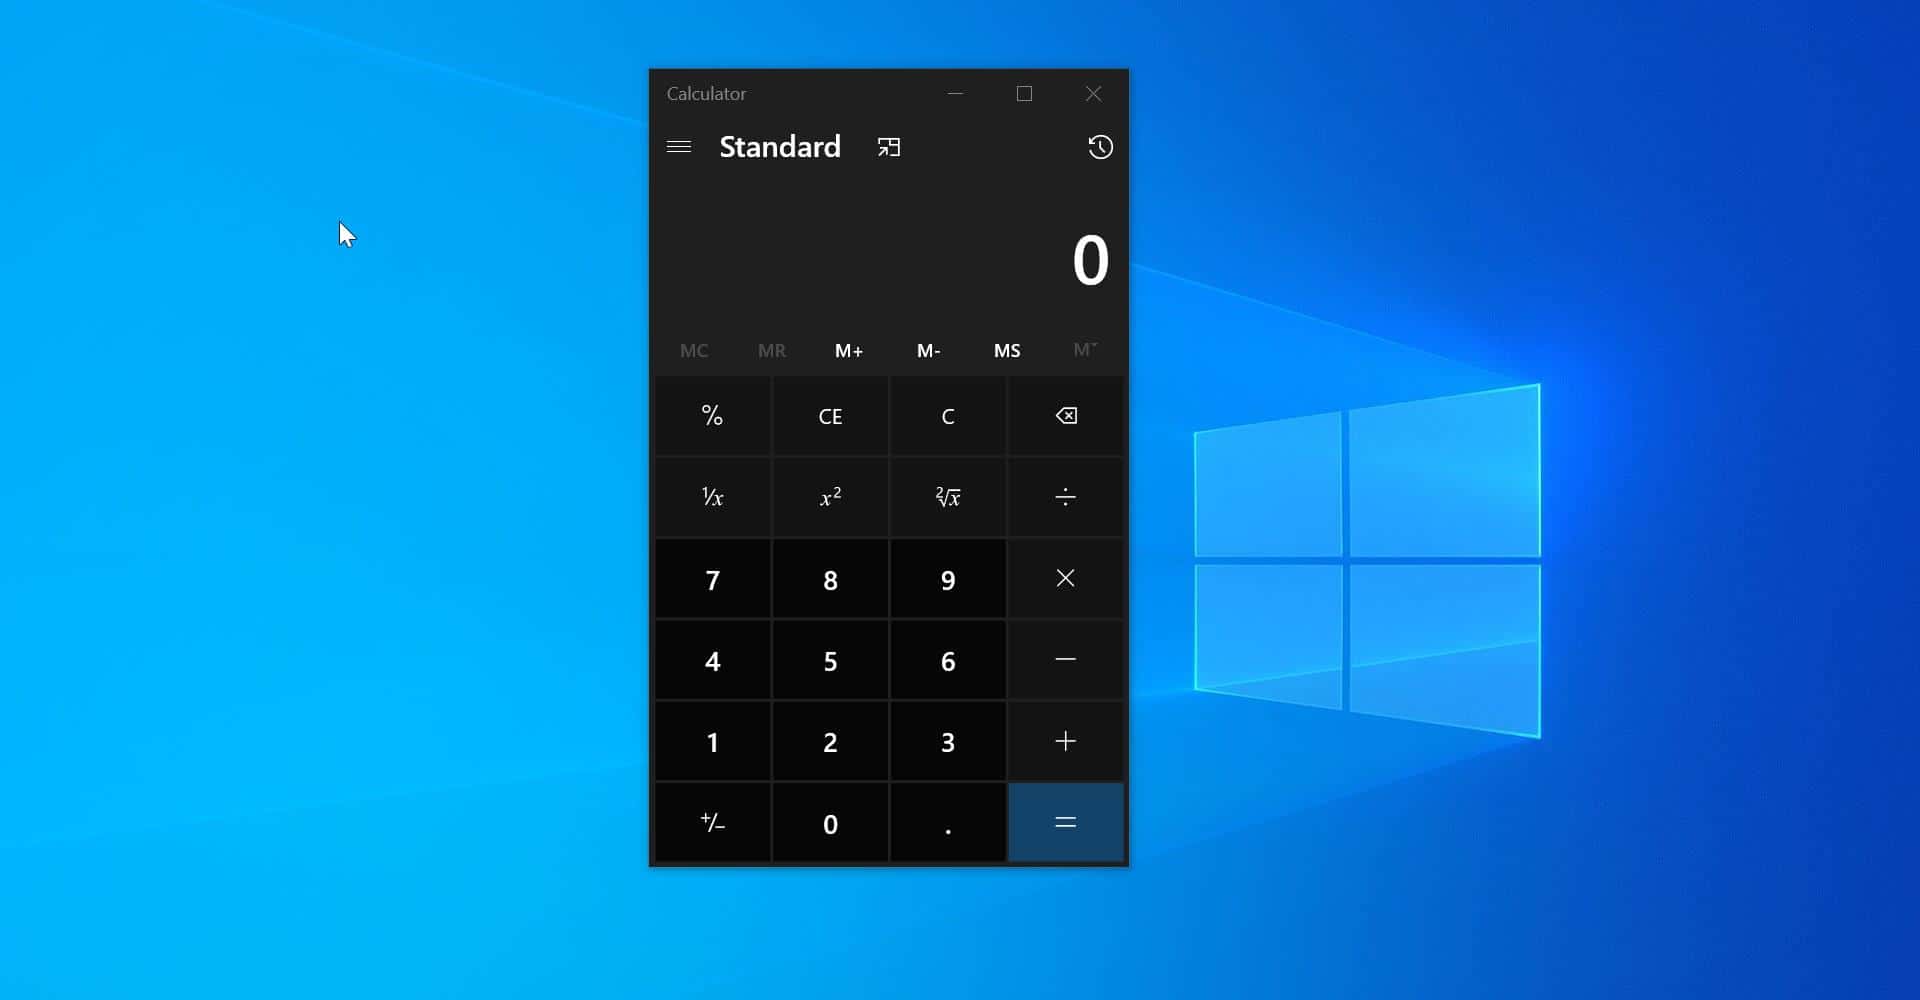 Create Keyboard Shortcut to Launch Calculator App